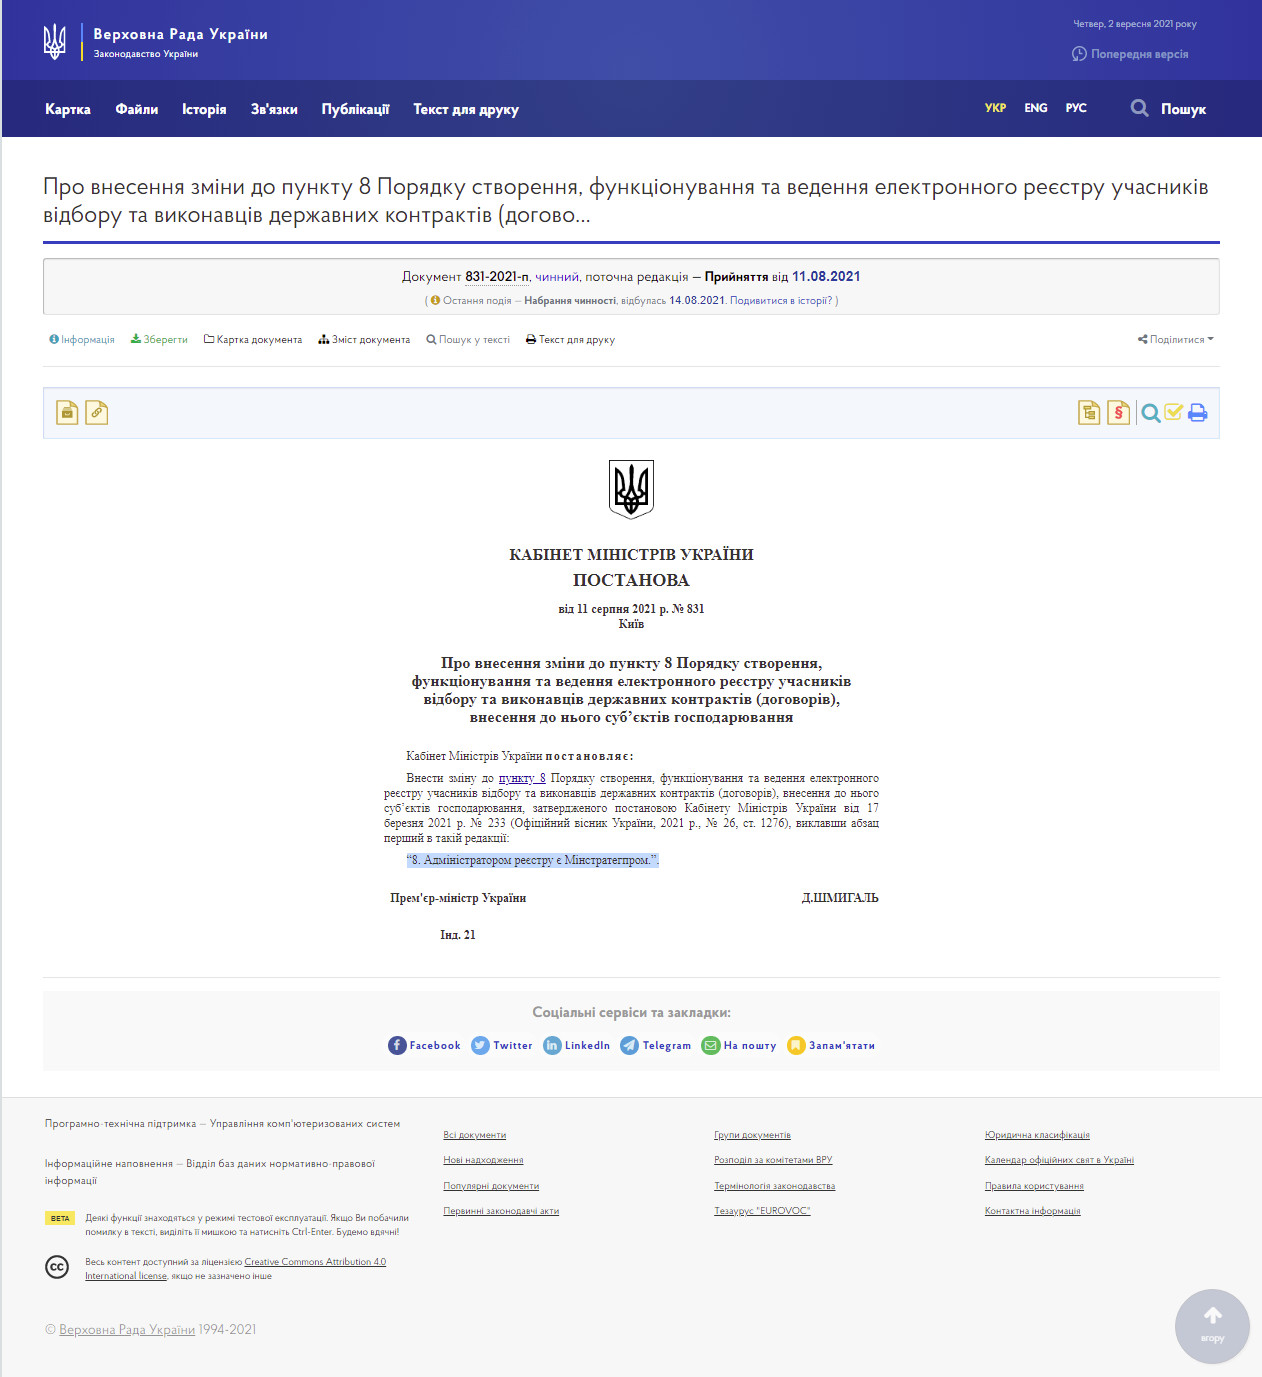 https://zakon.rada.gov.ua/laws/show/831-2021-%D0%BF#n2